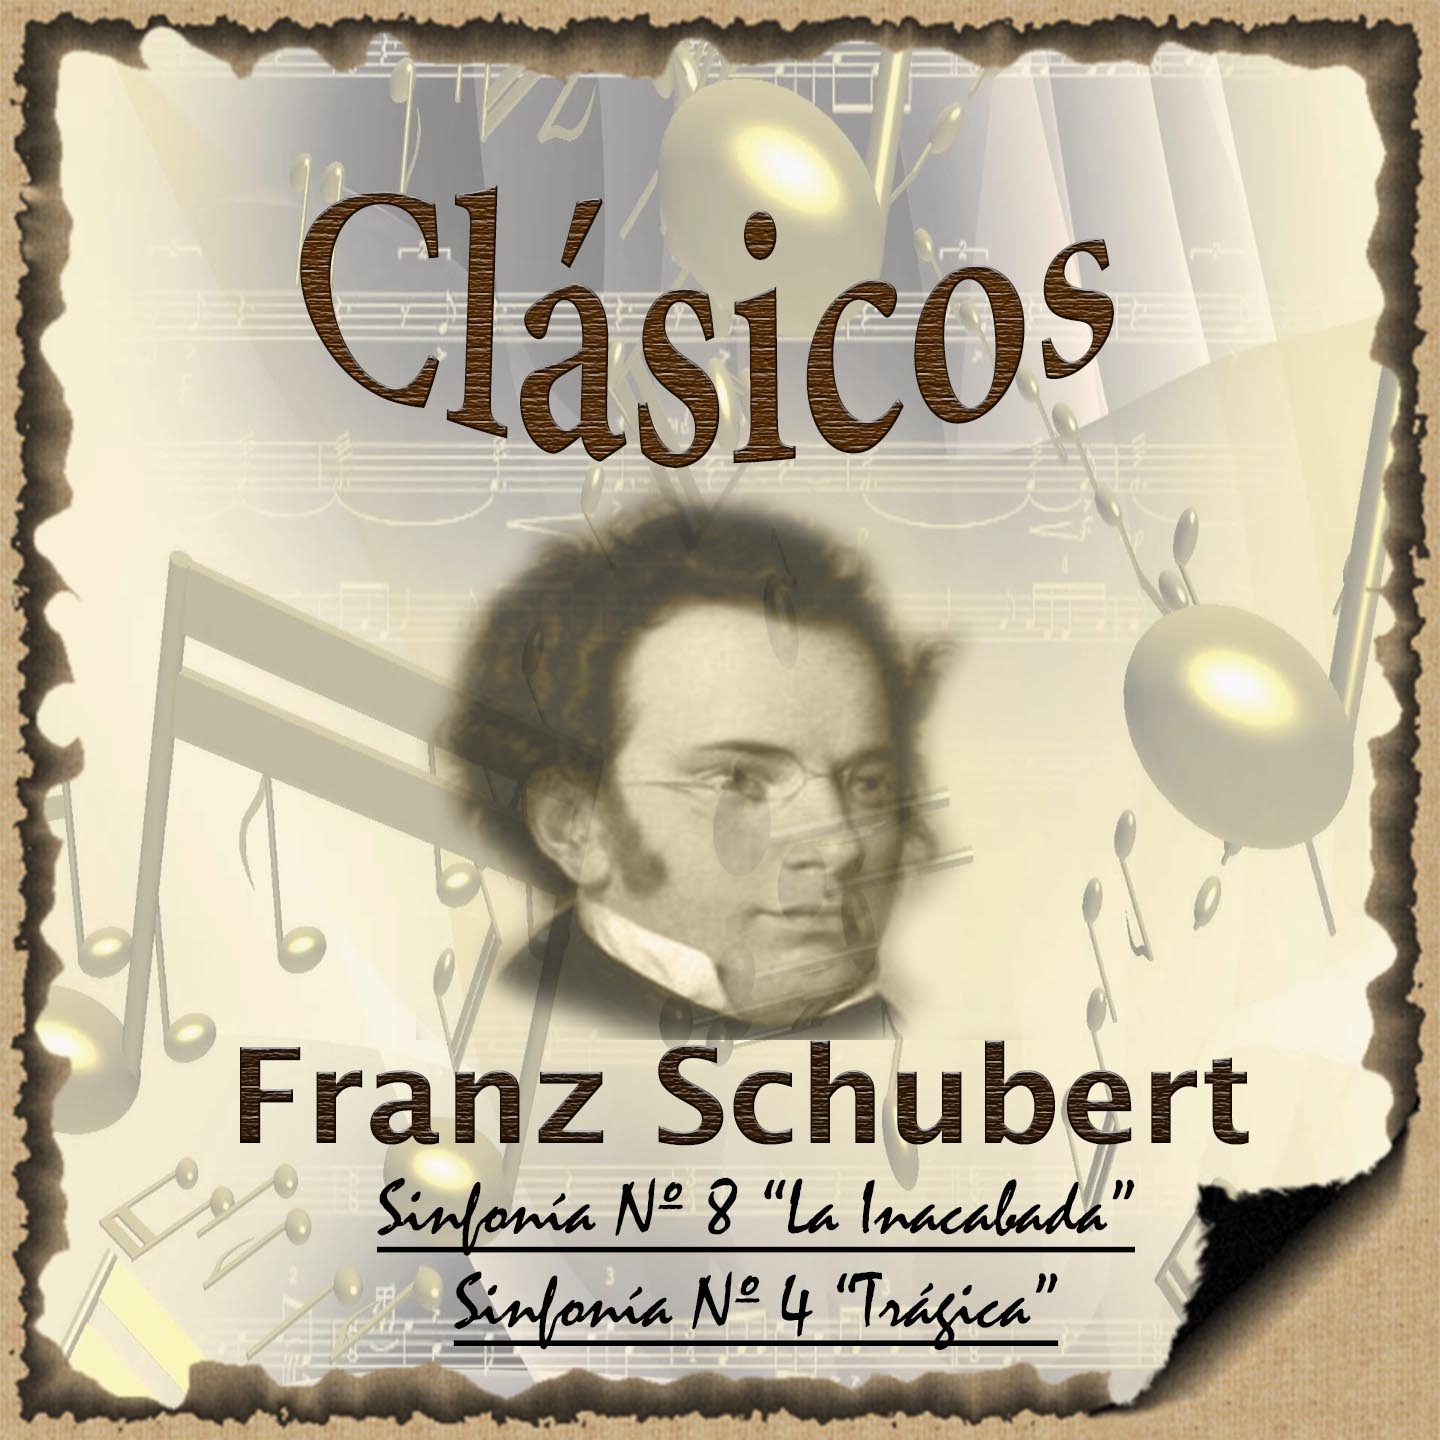 Schubert: Sinfoni a No. 8 " La Inacabada"  Sinfoni a No. 4 " Tra gica"